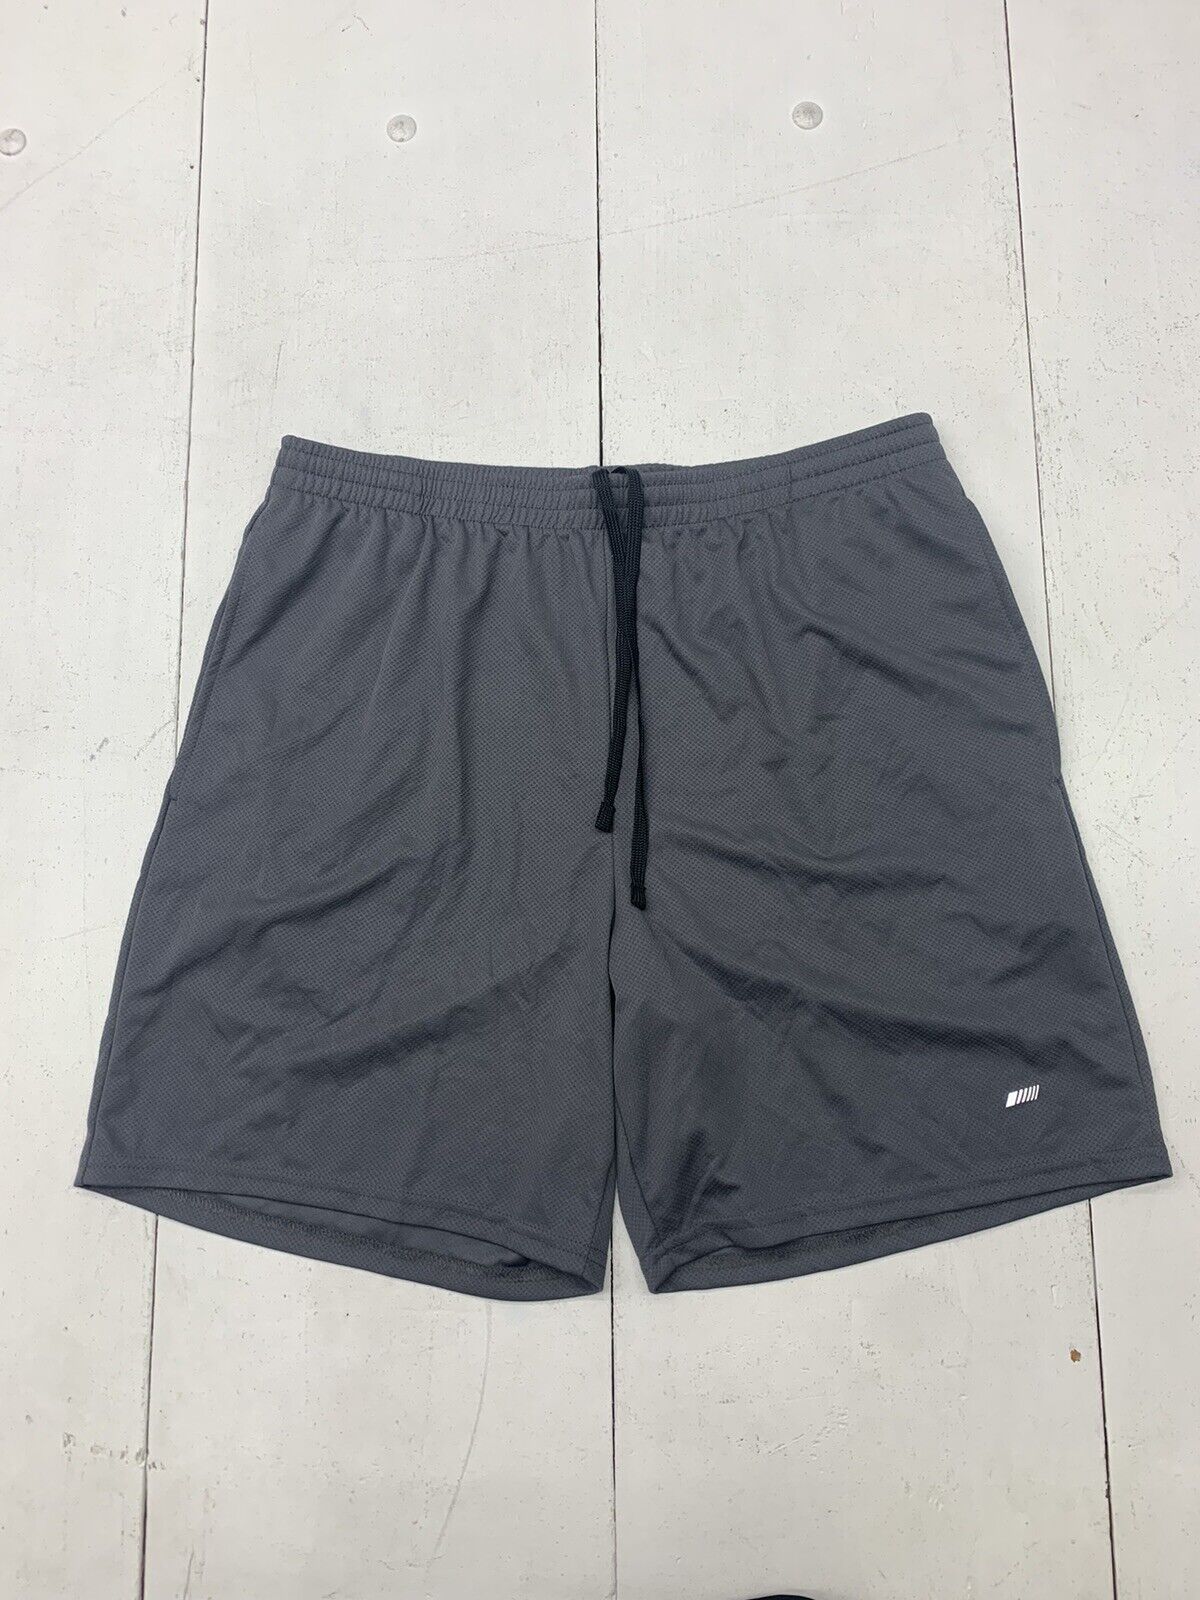 Amazon Essentials Mens Grey Mesh Athletic Shorts Size XL